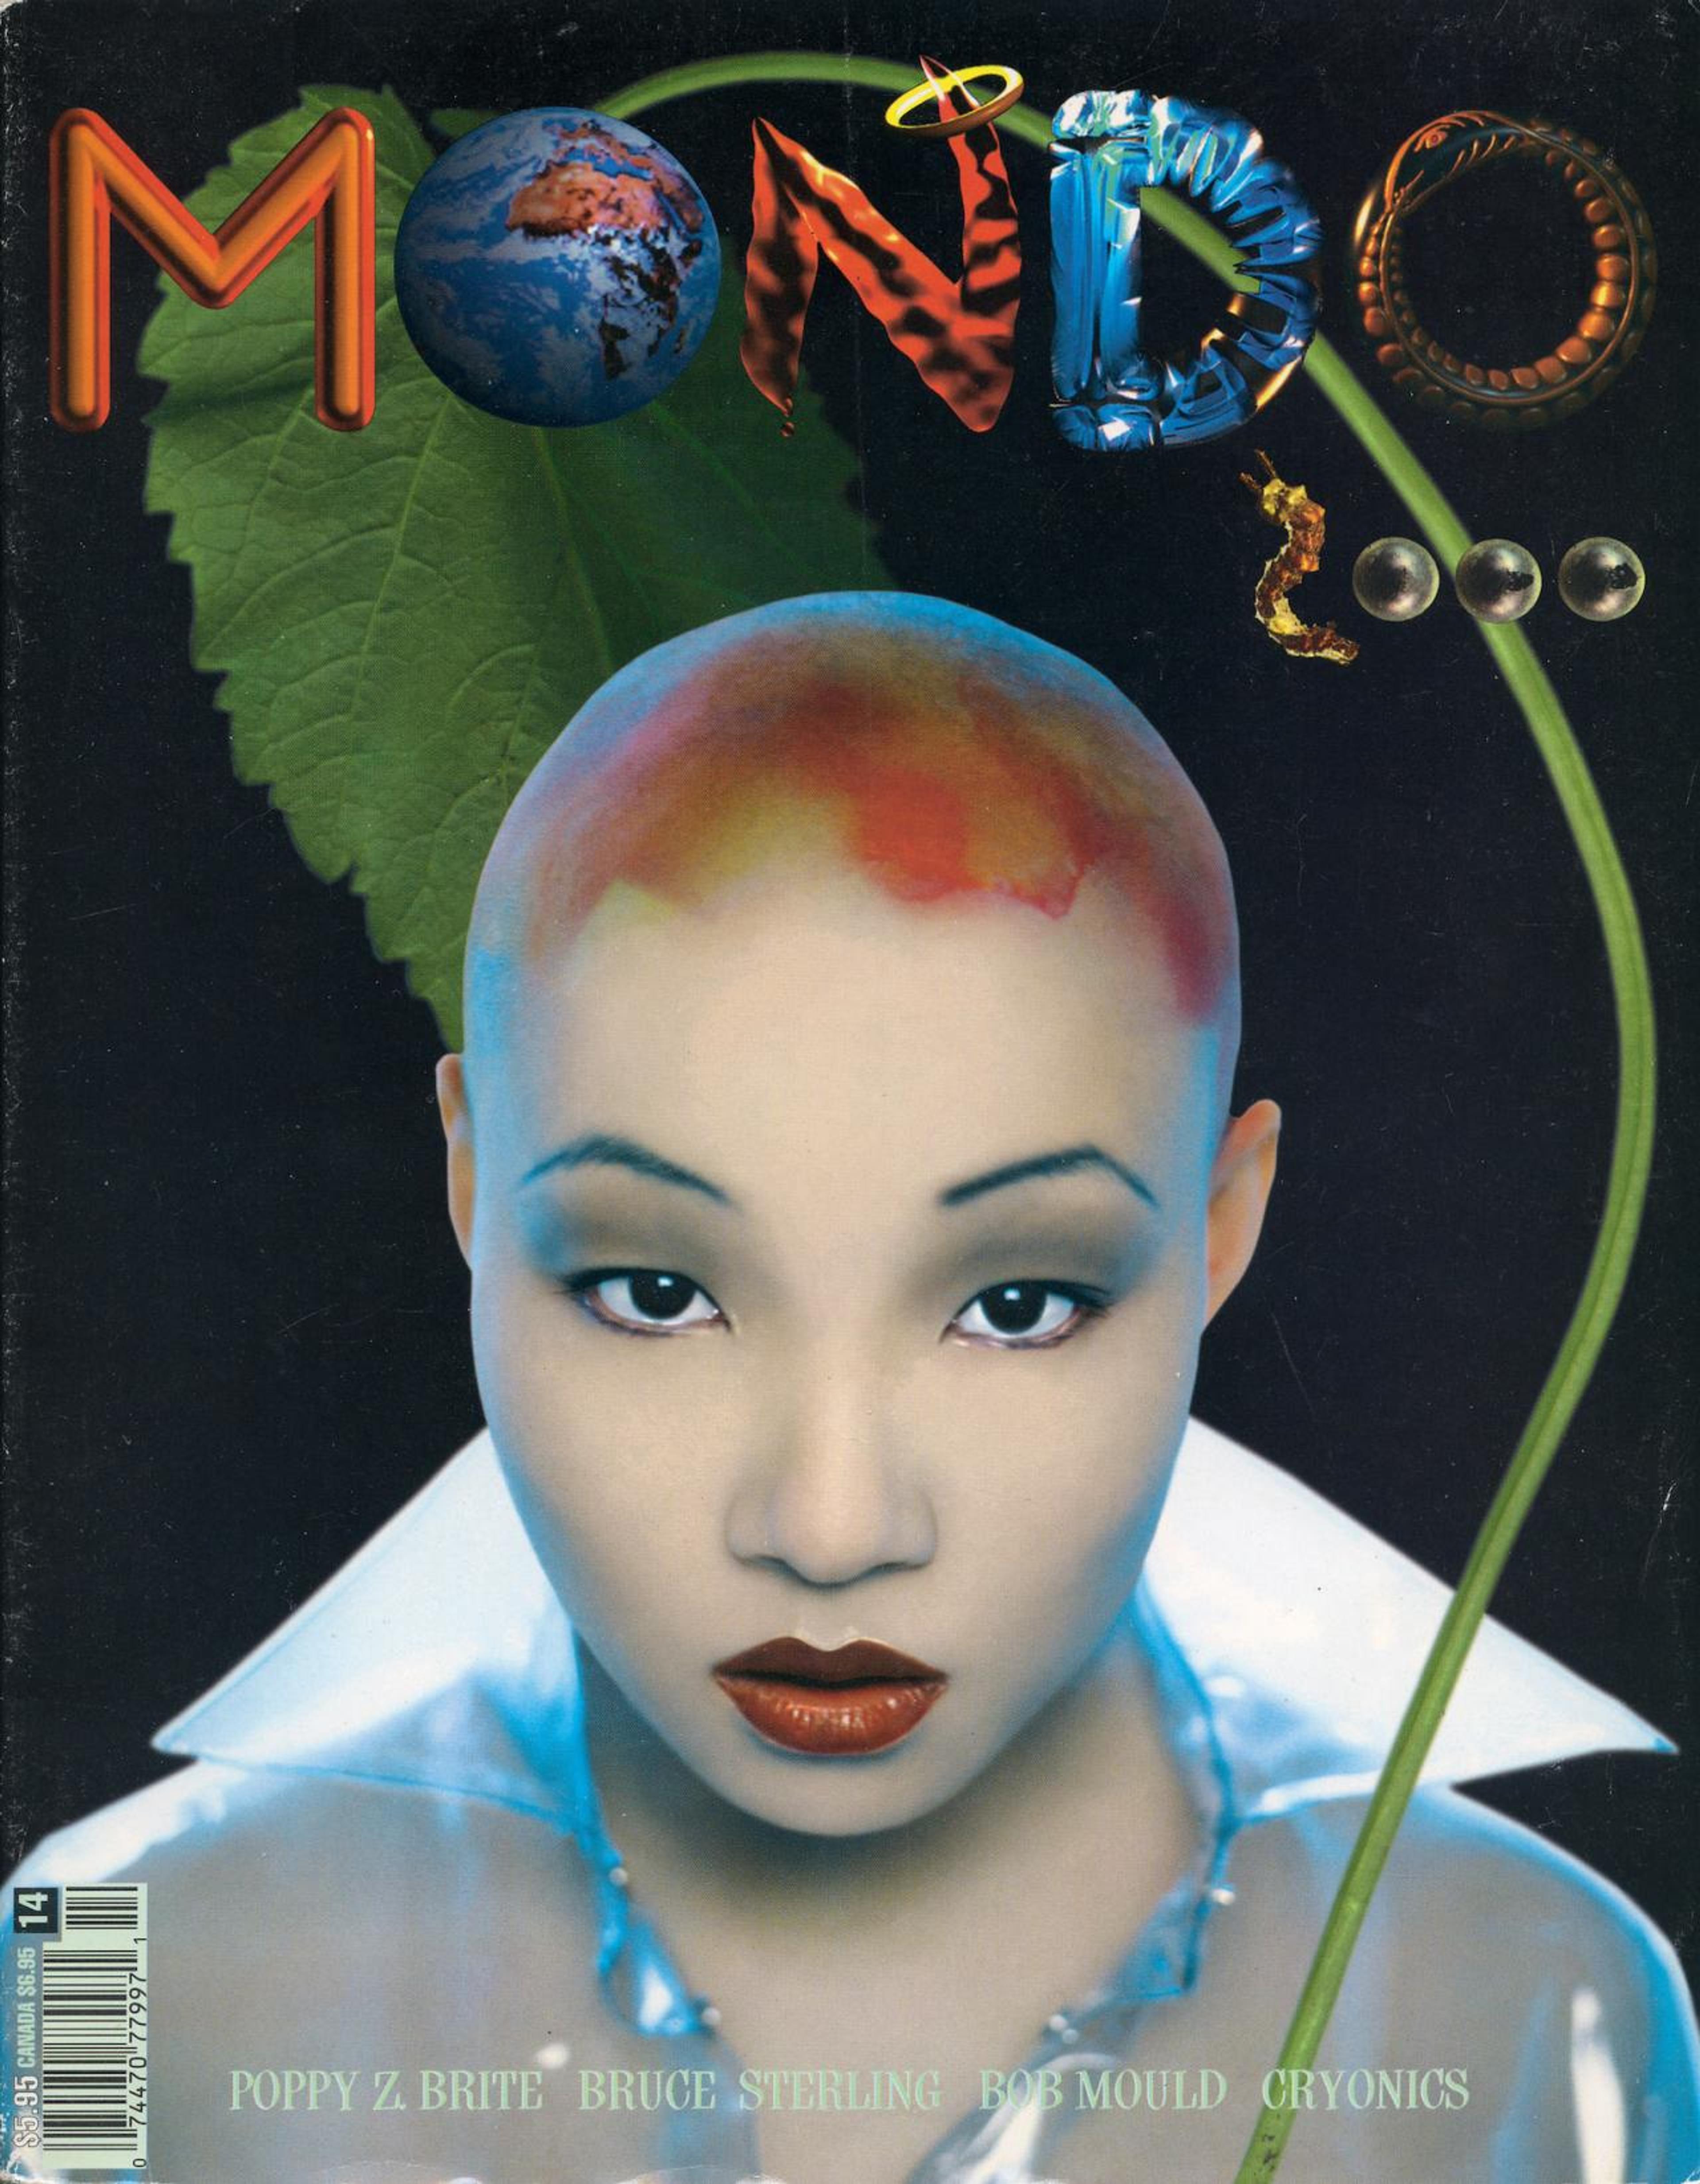 Mondo 2000 cover